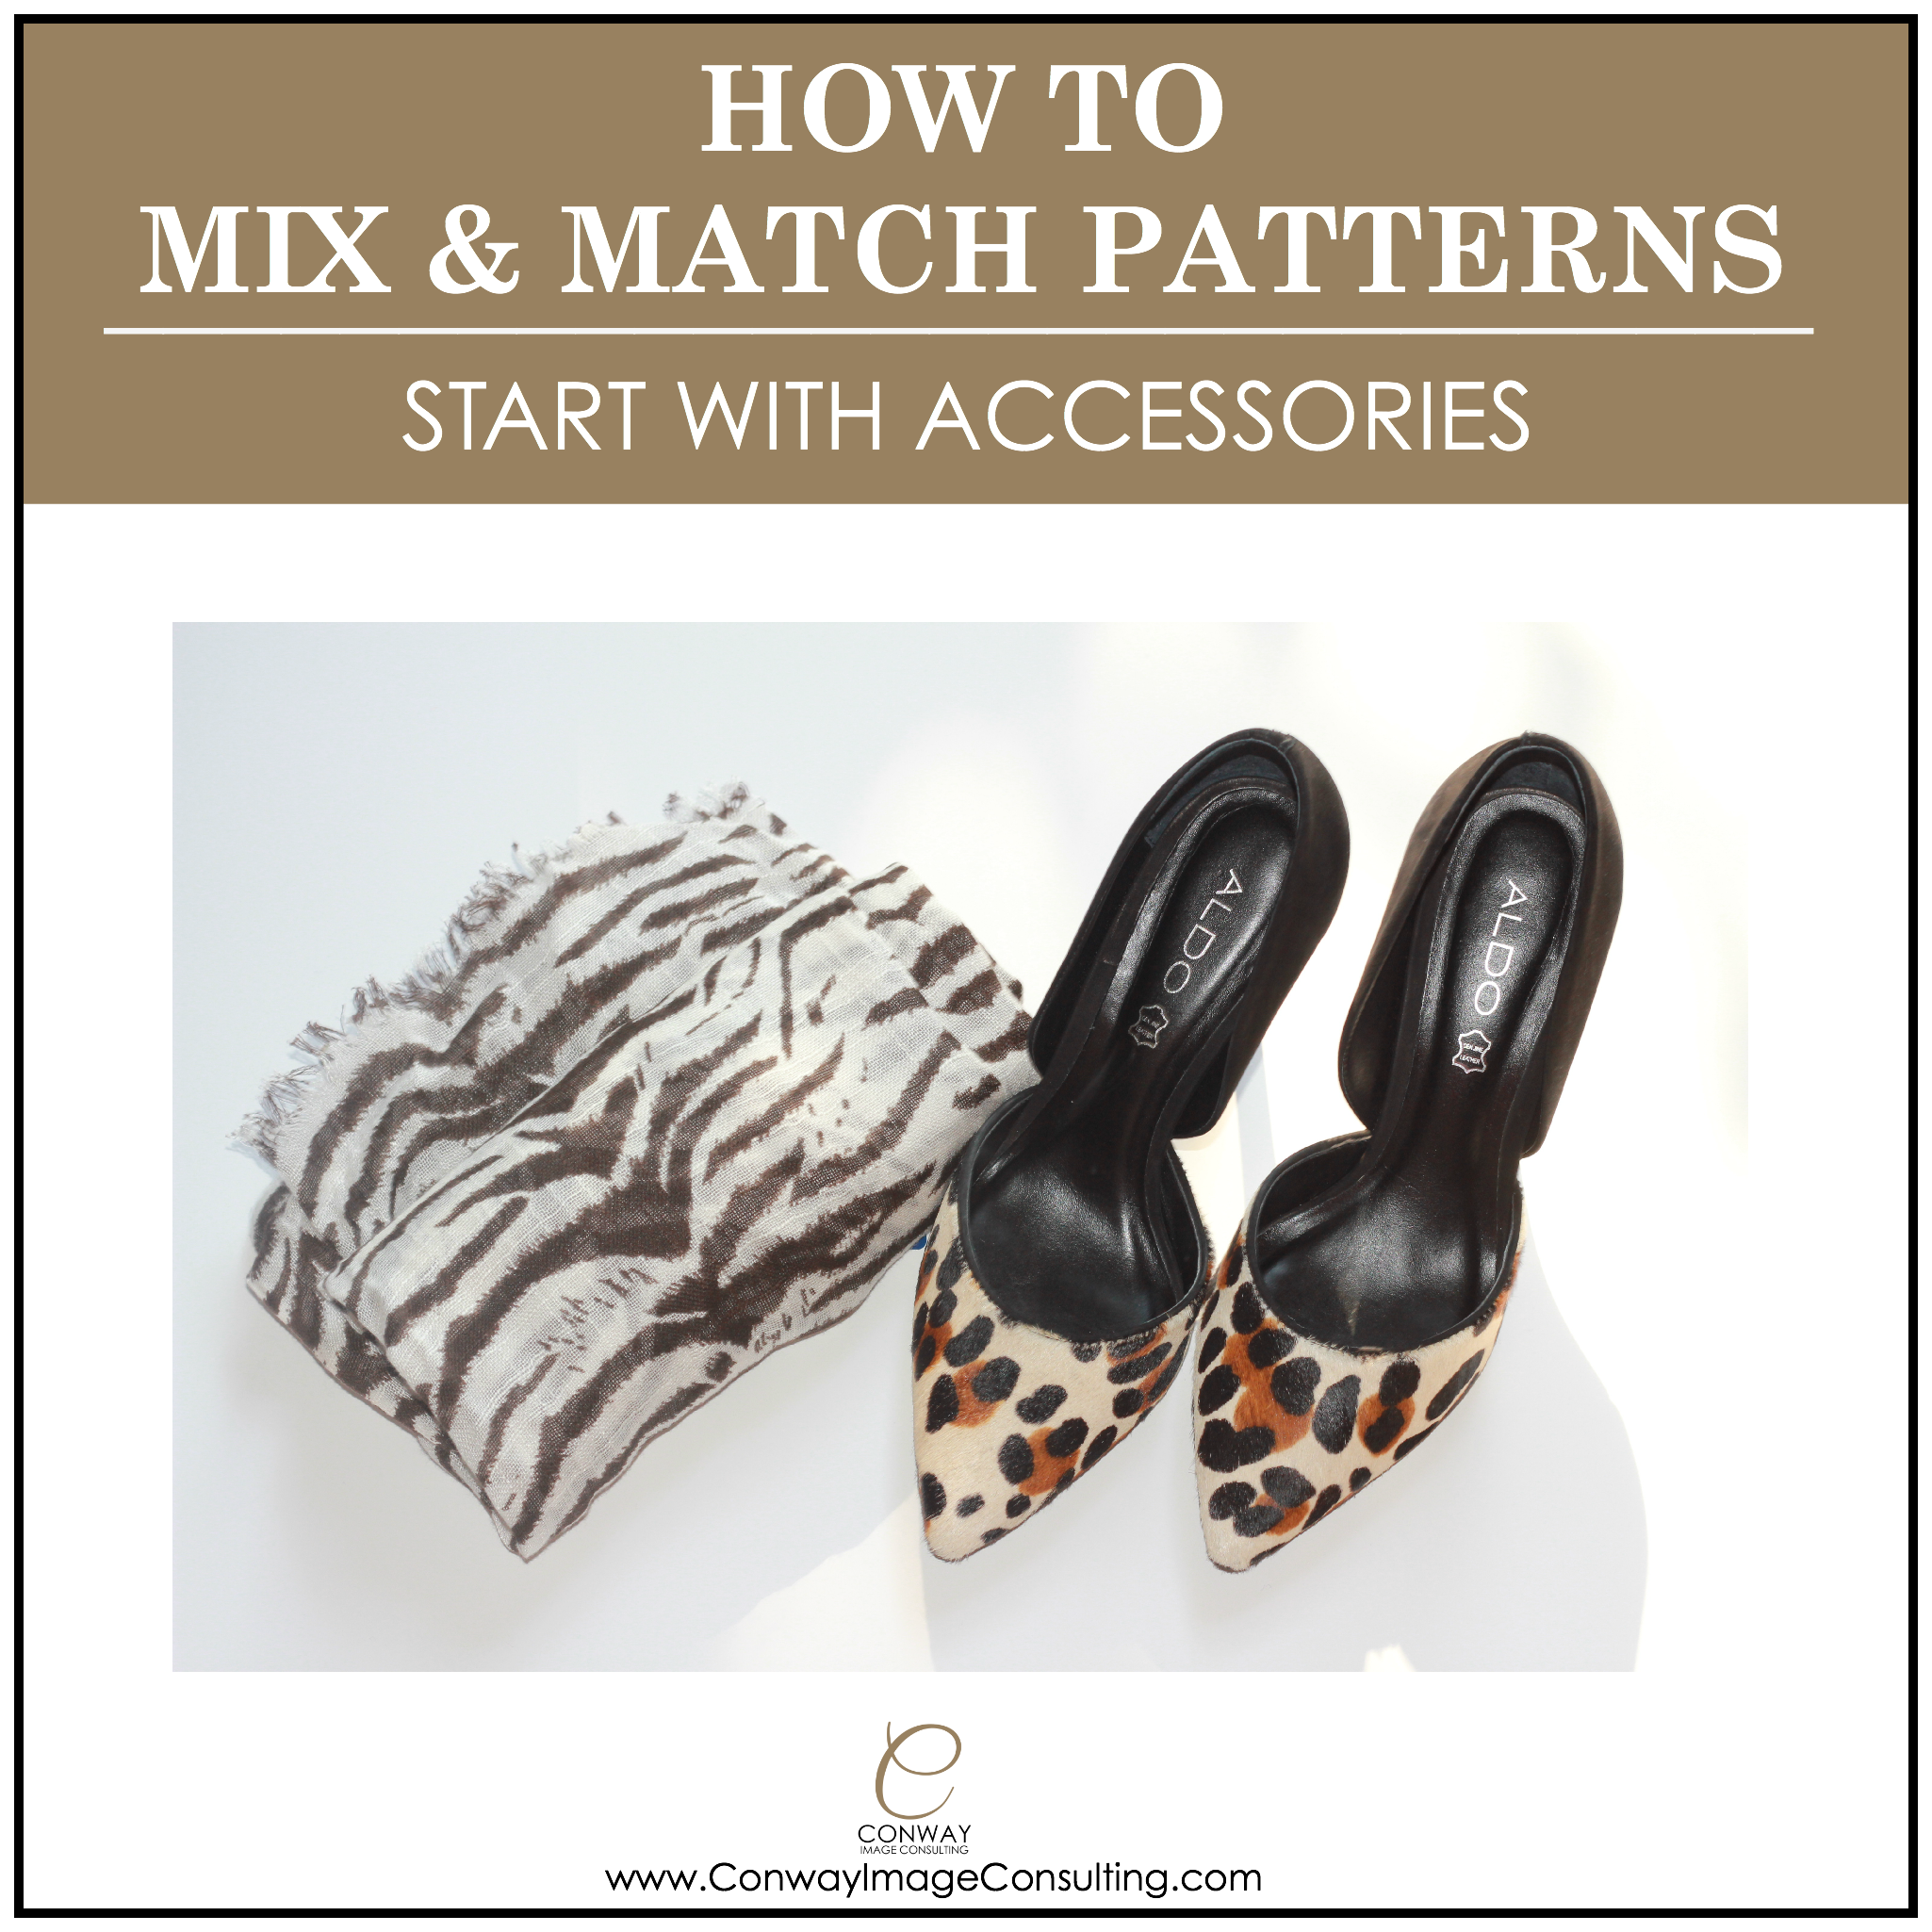 Mix & Match Patterns - Start with Accessories